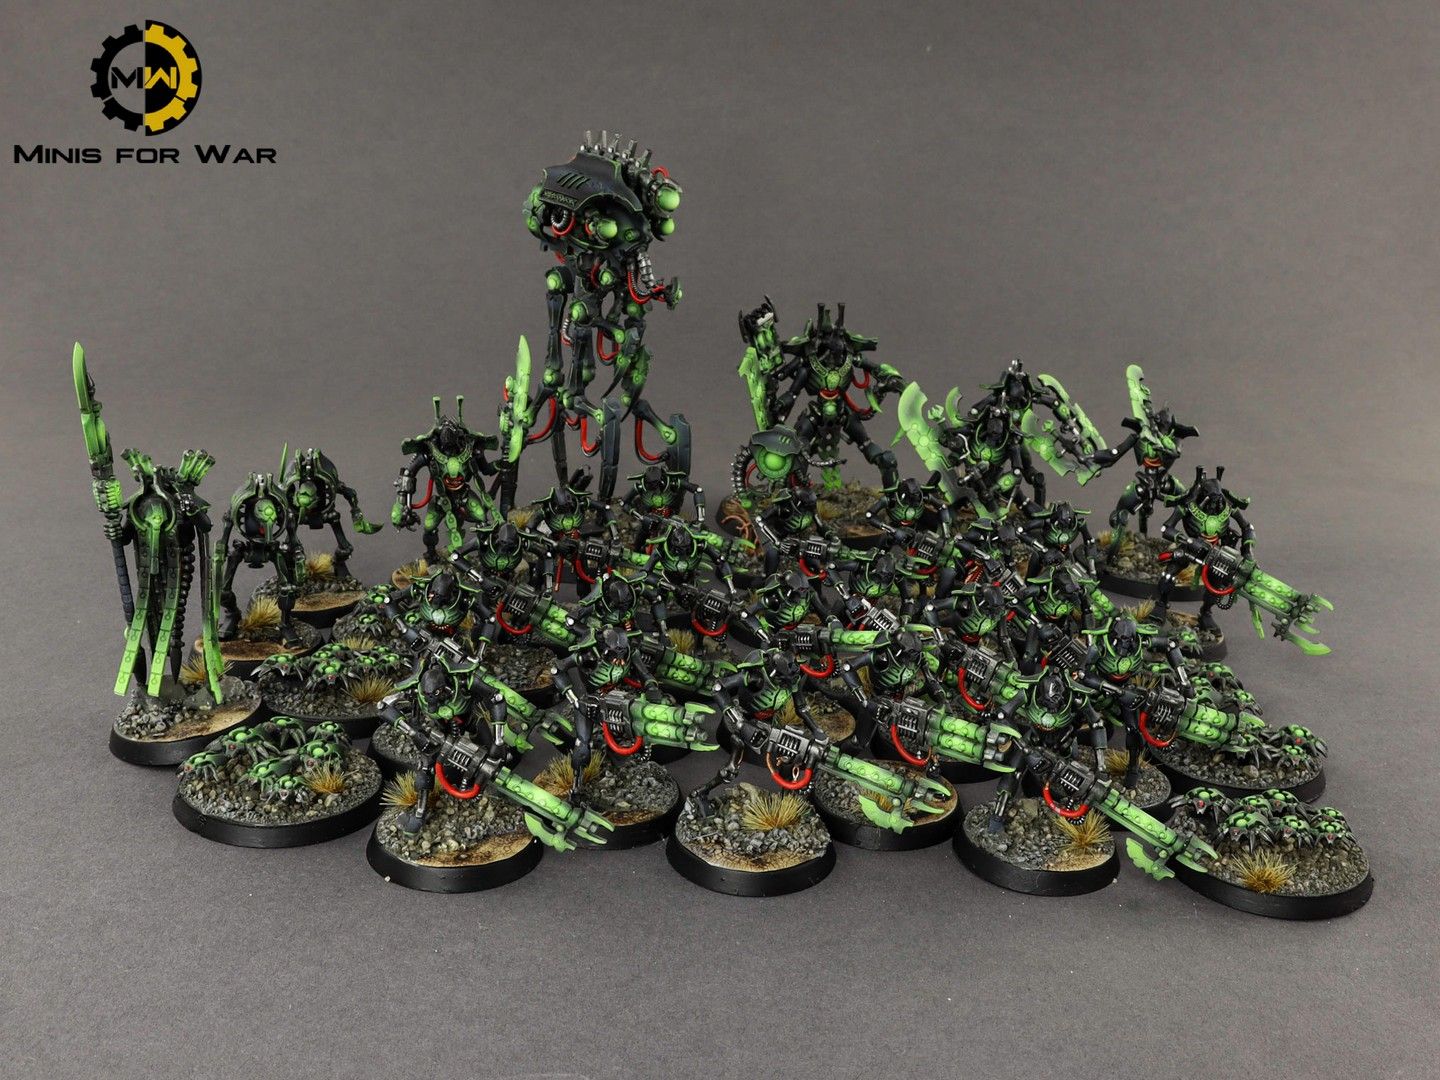 40k - Necron Army - Minis For War Painting Studio